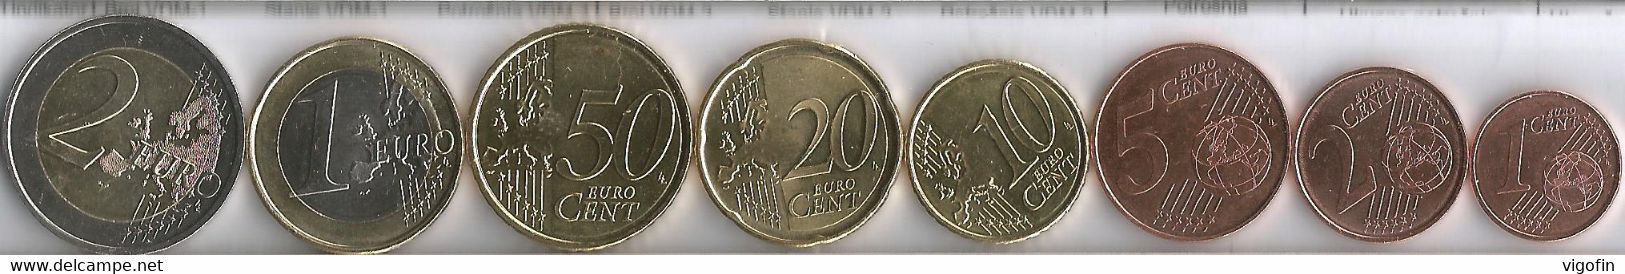 HR 2023 CROATIA EURO SET - EUR AND CENTS, HRVATSKA CROATIA - Croatia